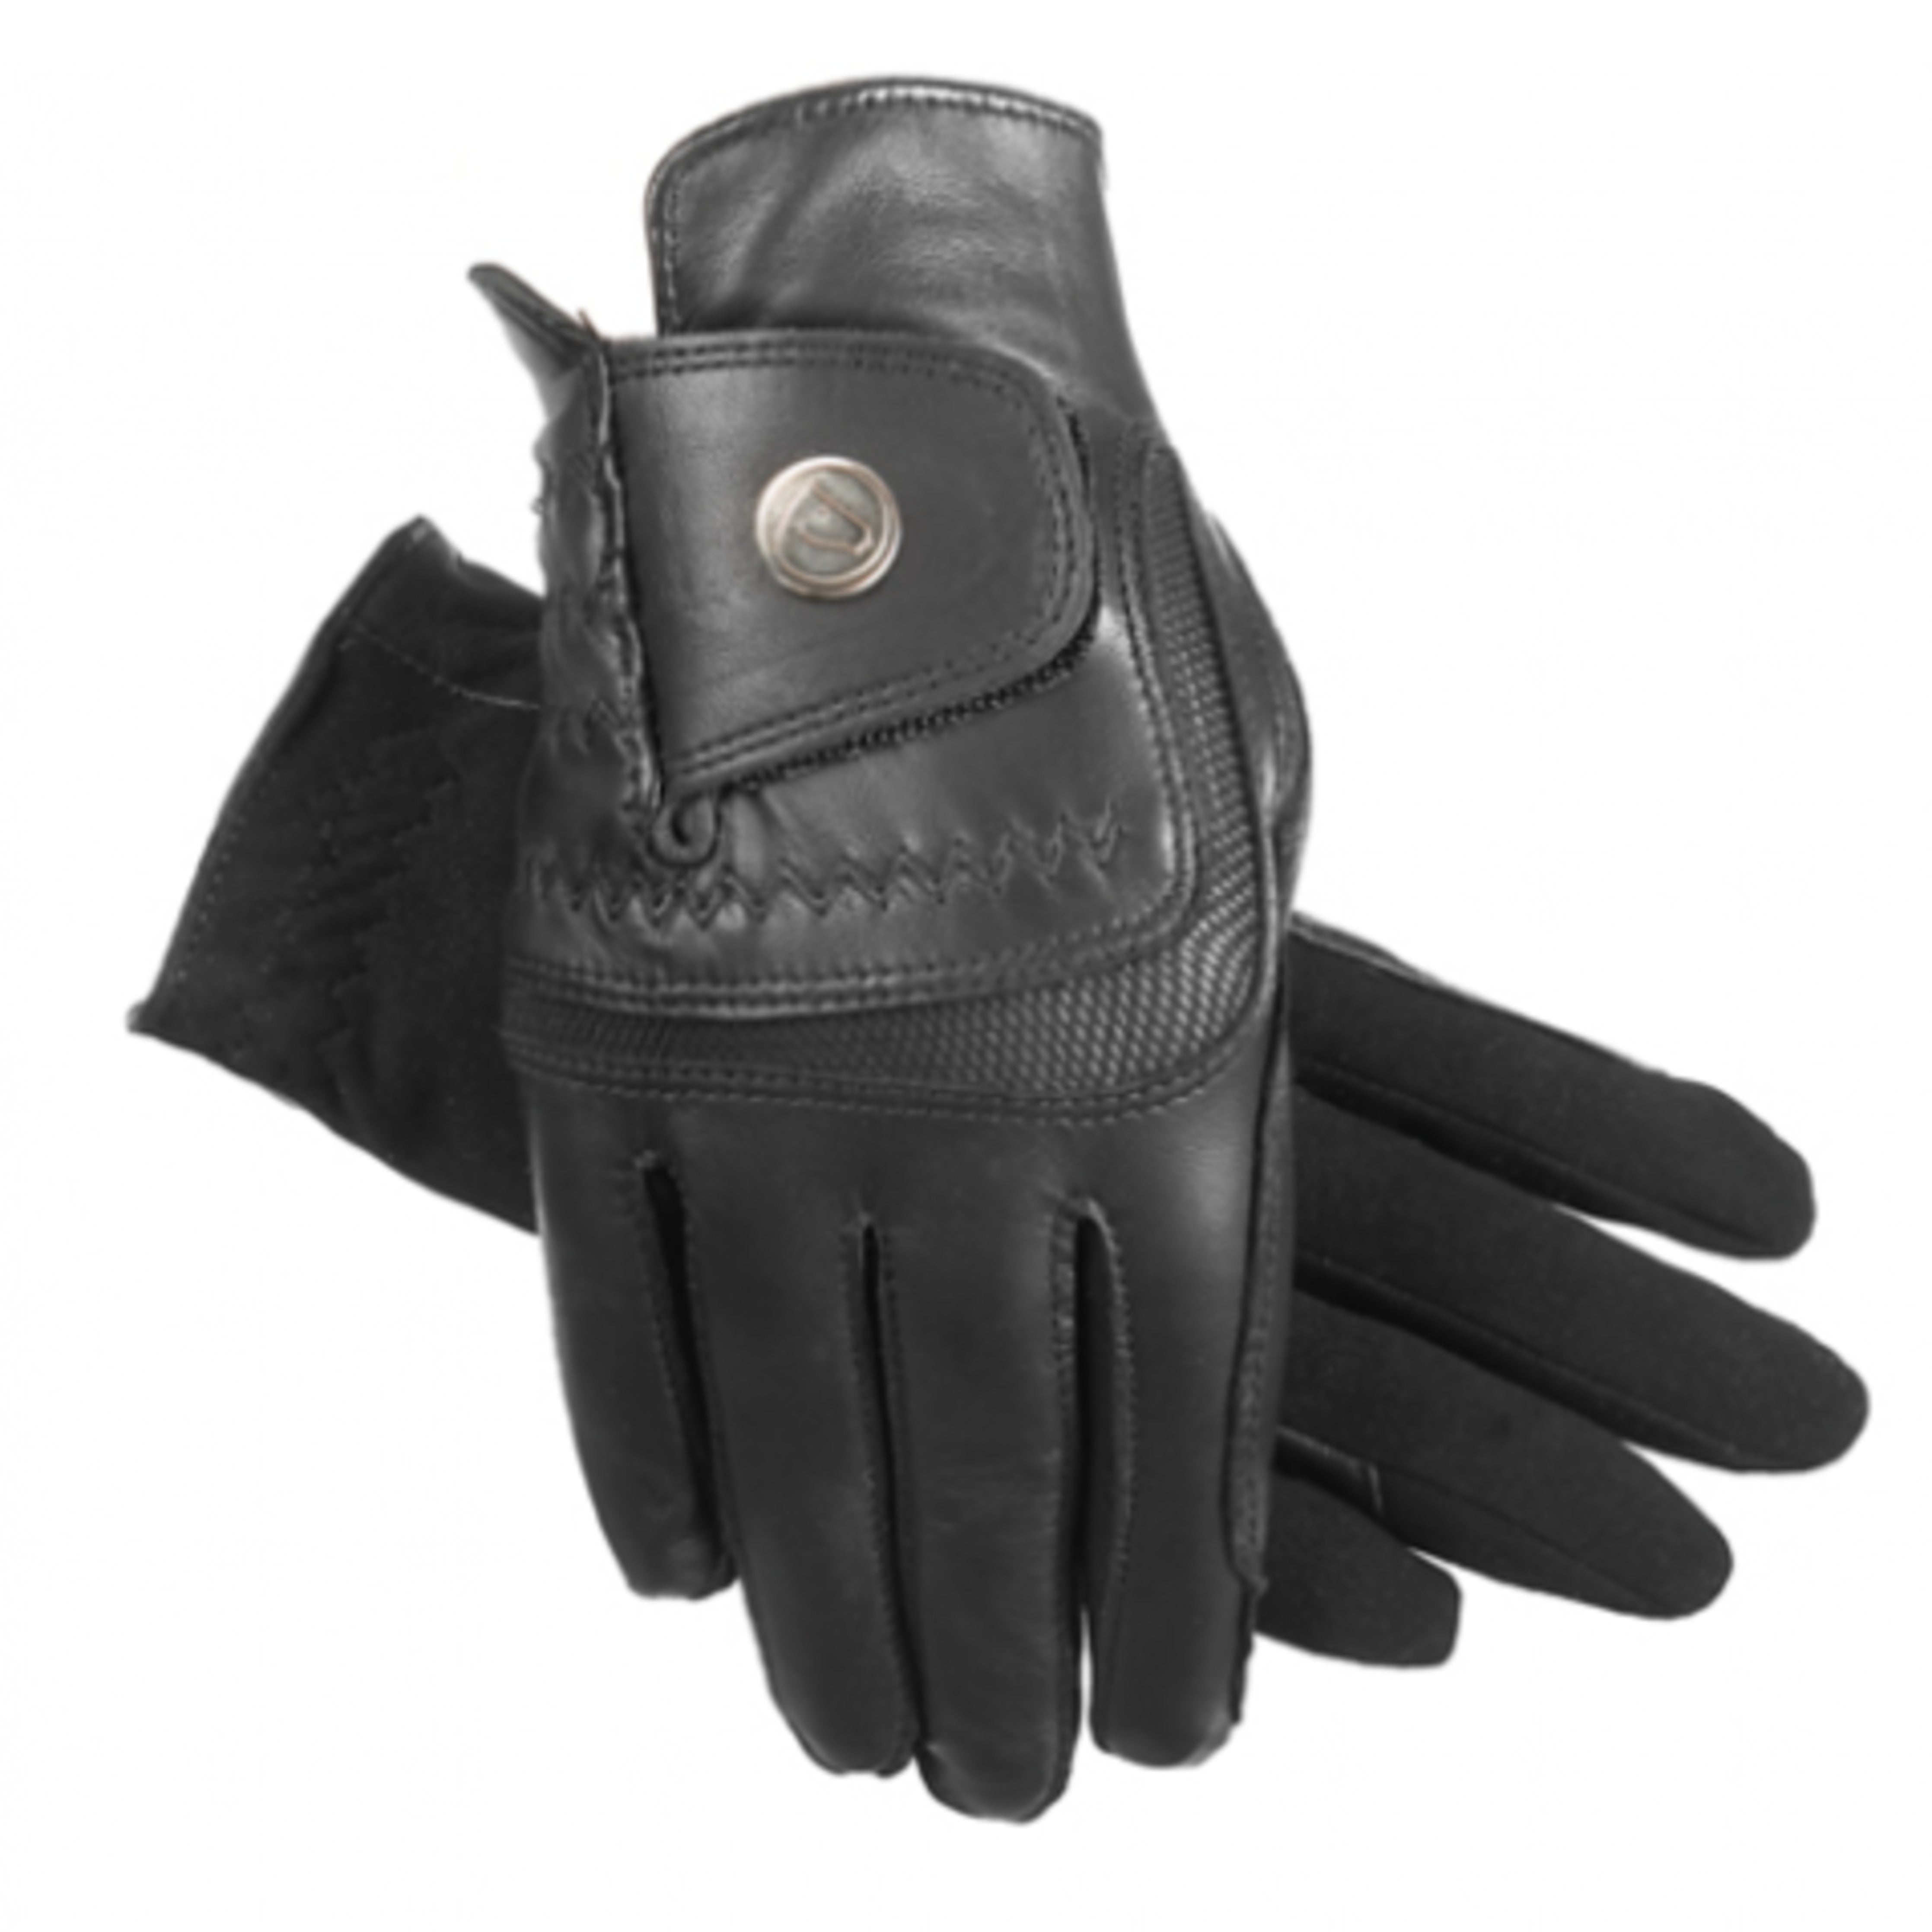 SSG Gloves 4200 Hybrid Extreme